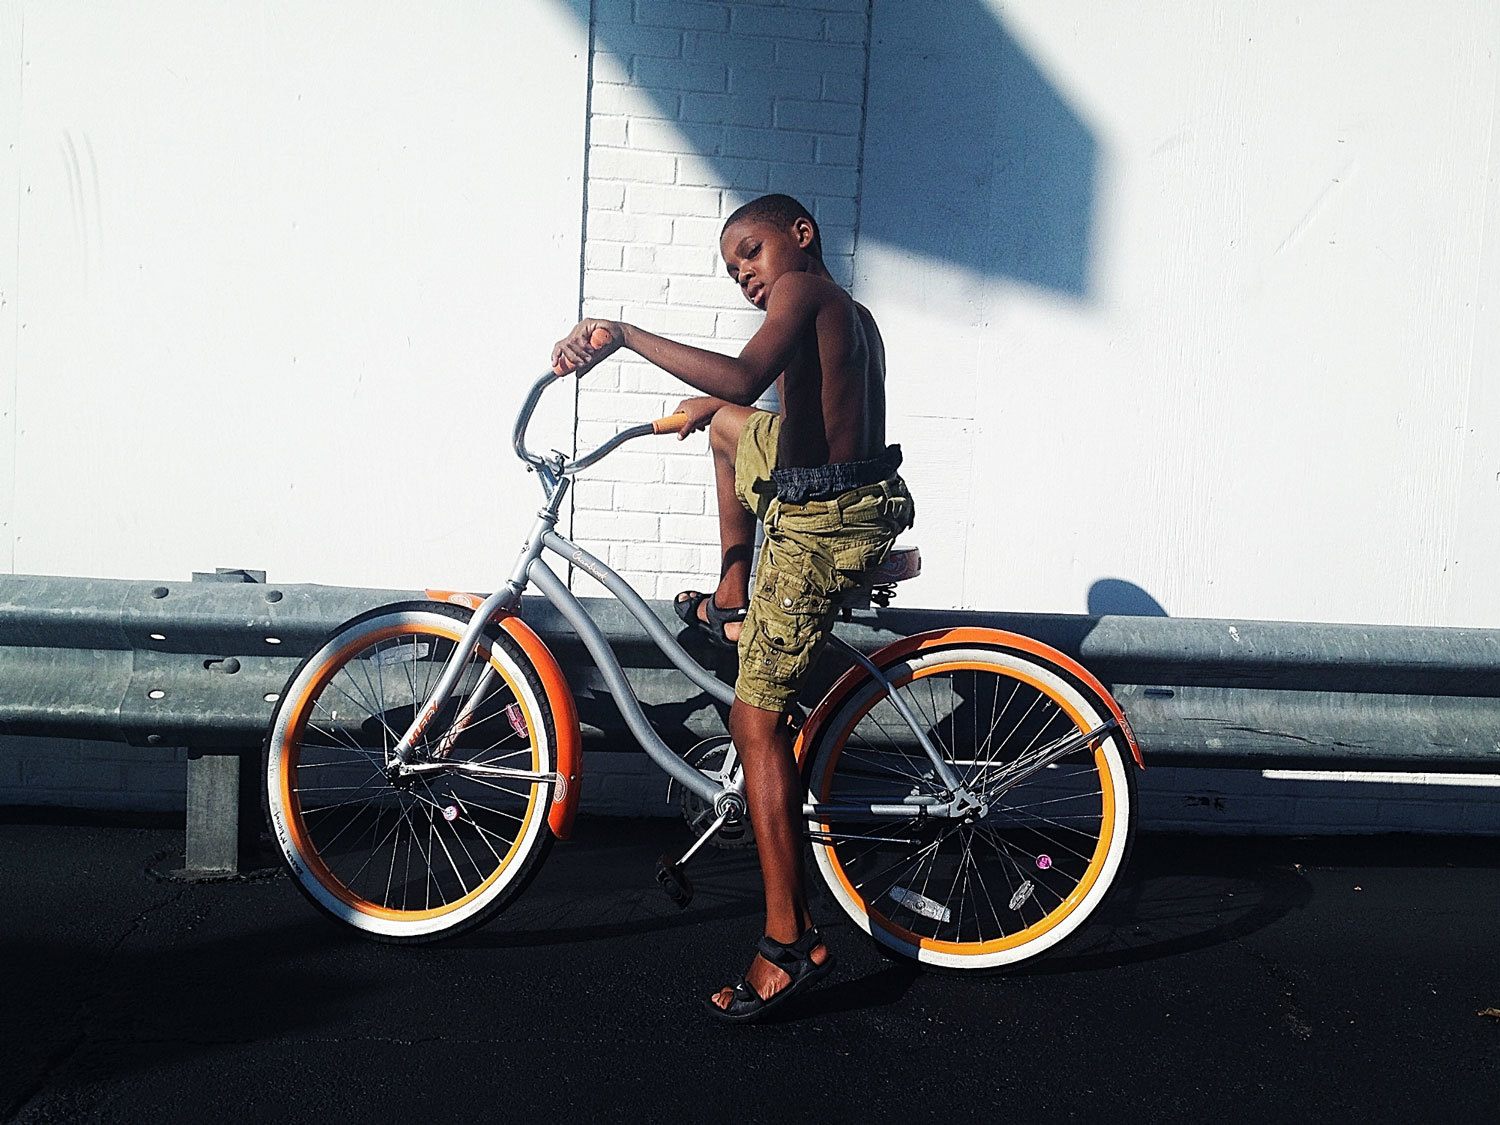 Schoolxxxgirl - shawn theodore's street shots spotlight black neighborhoods